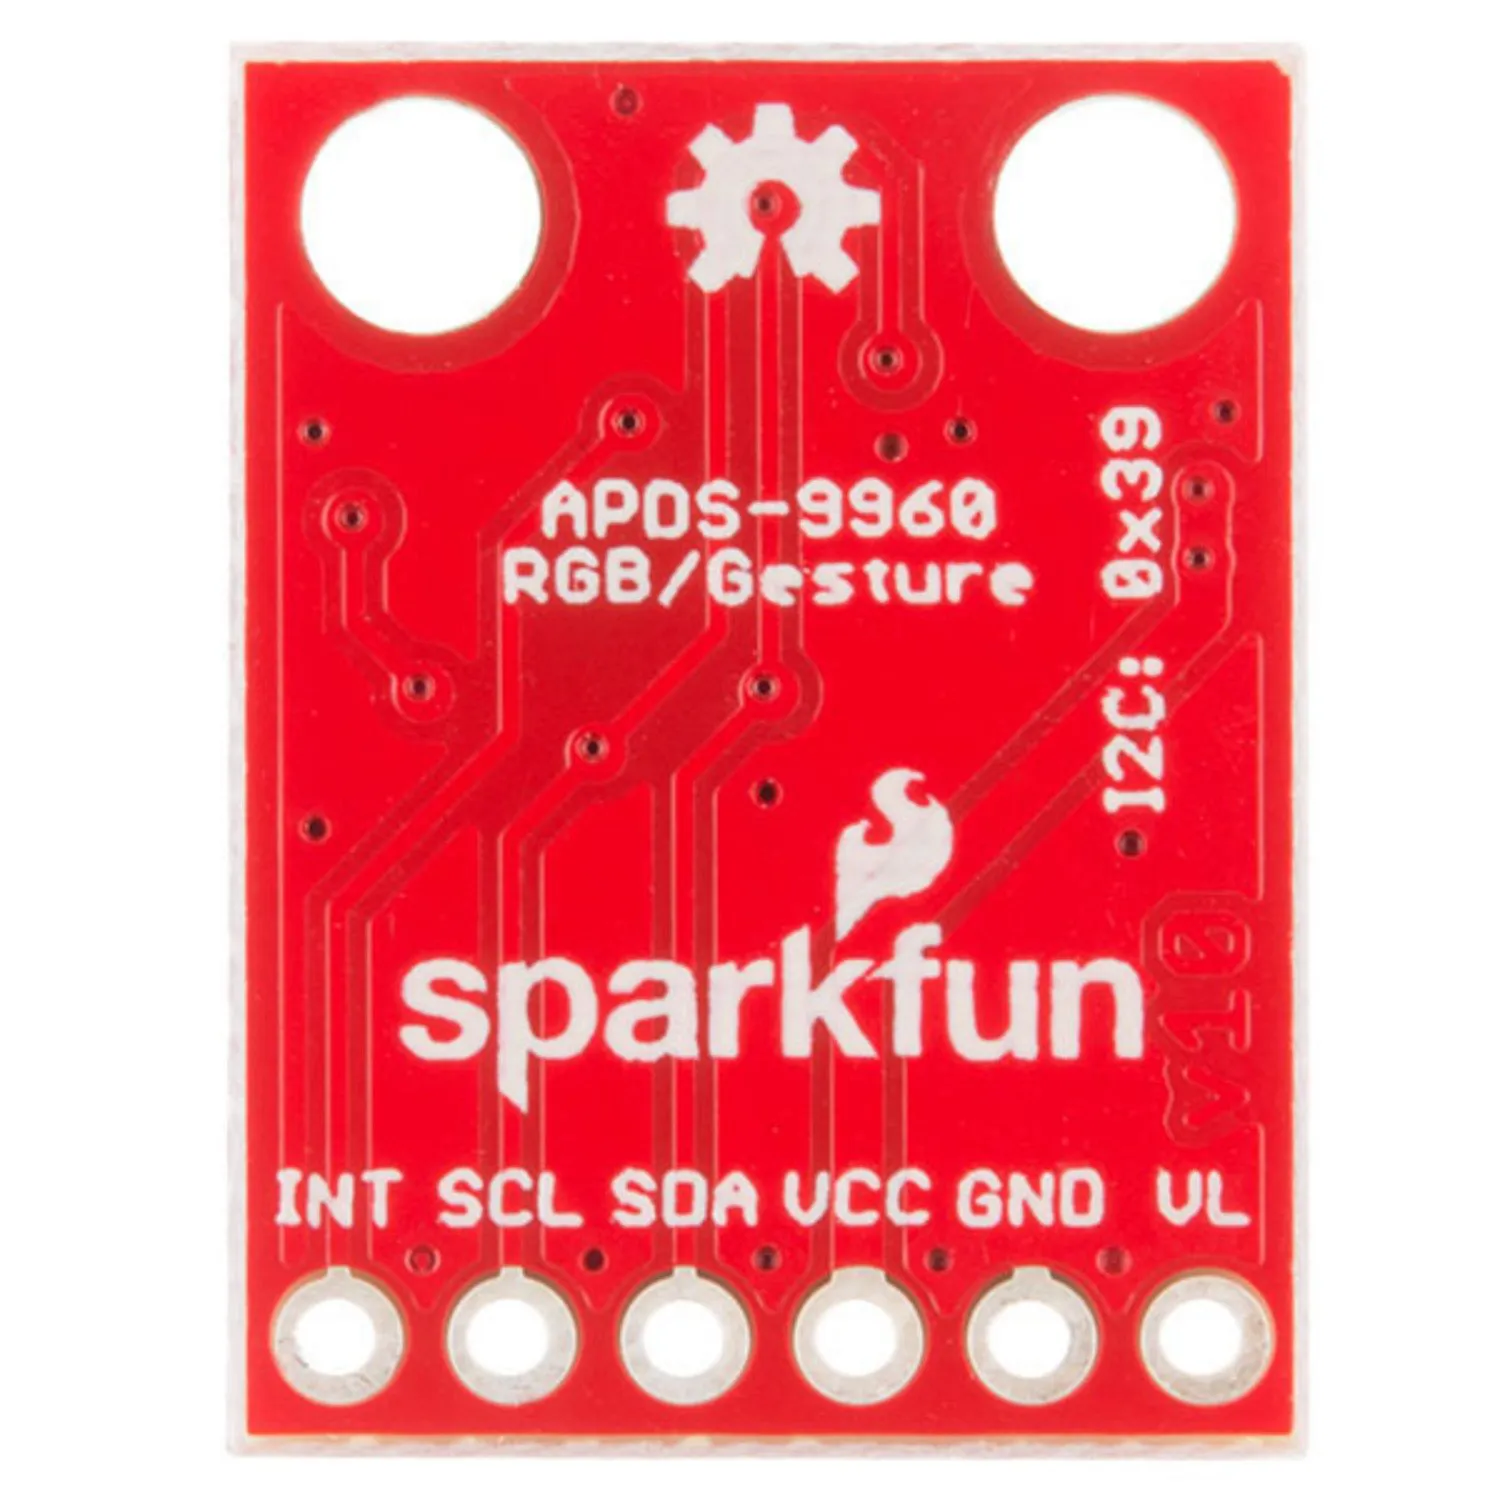 Photo of SparkFun RGB and Gesture Sensor - APDS-9960